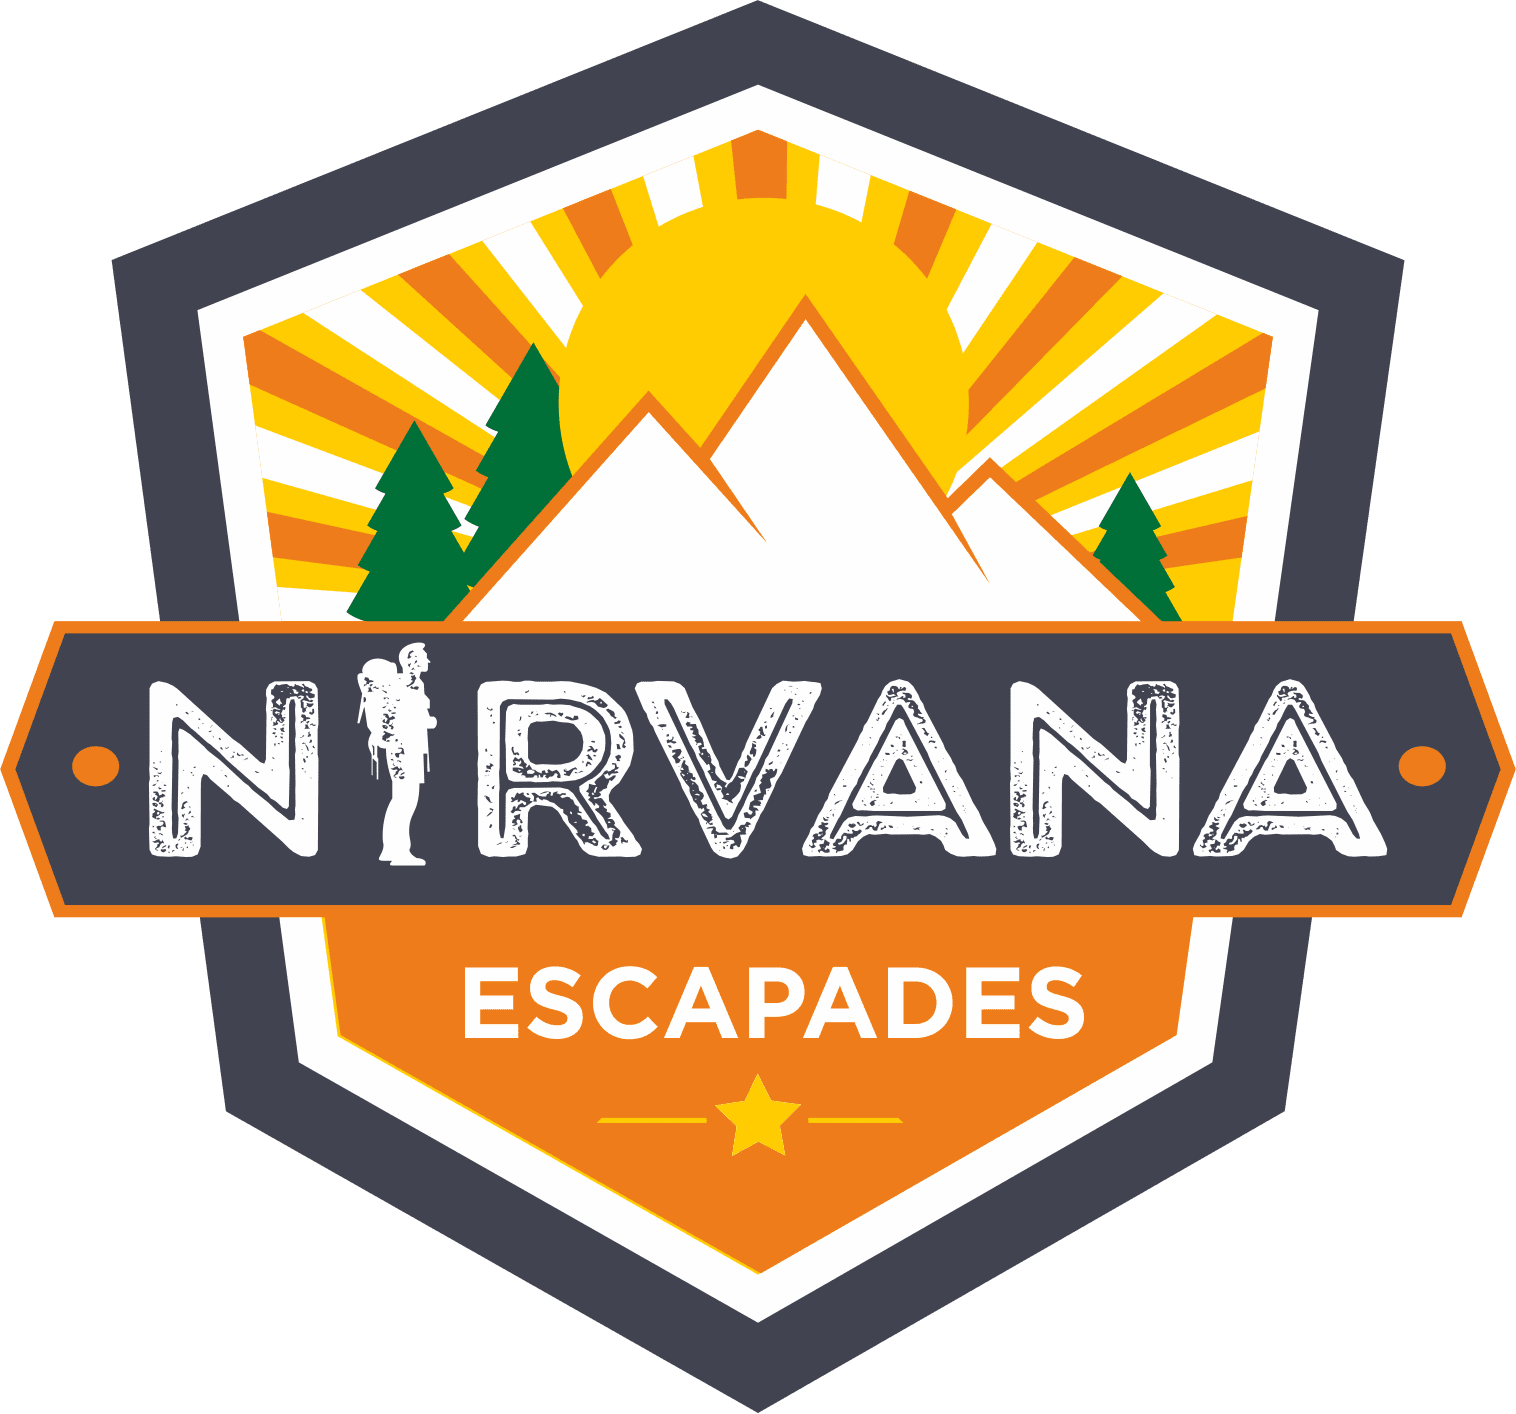 Nirvana Escapades